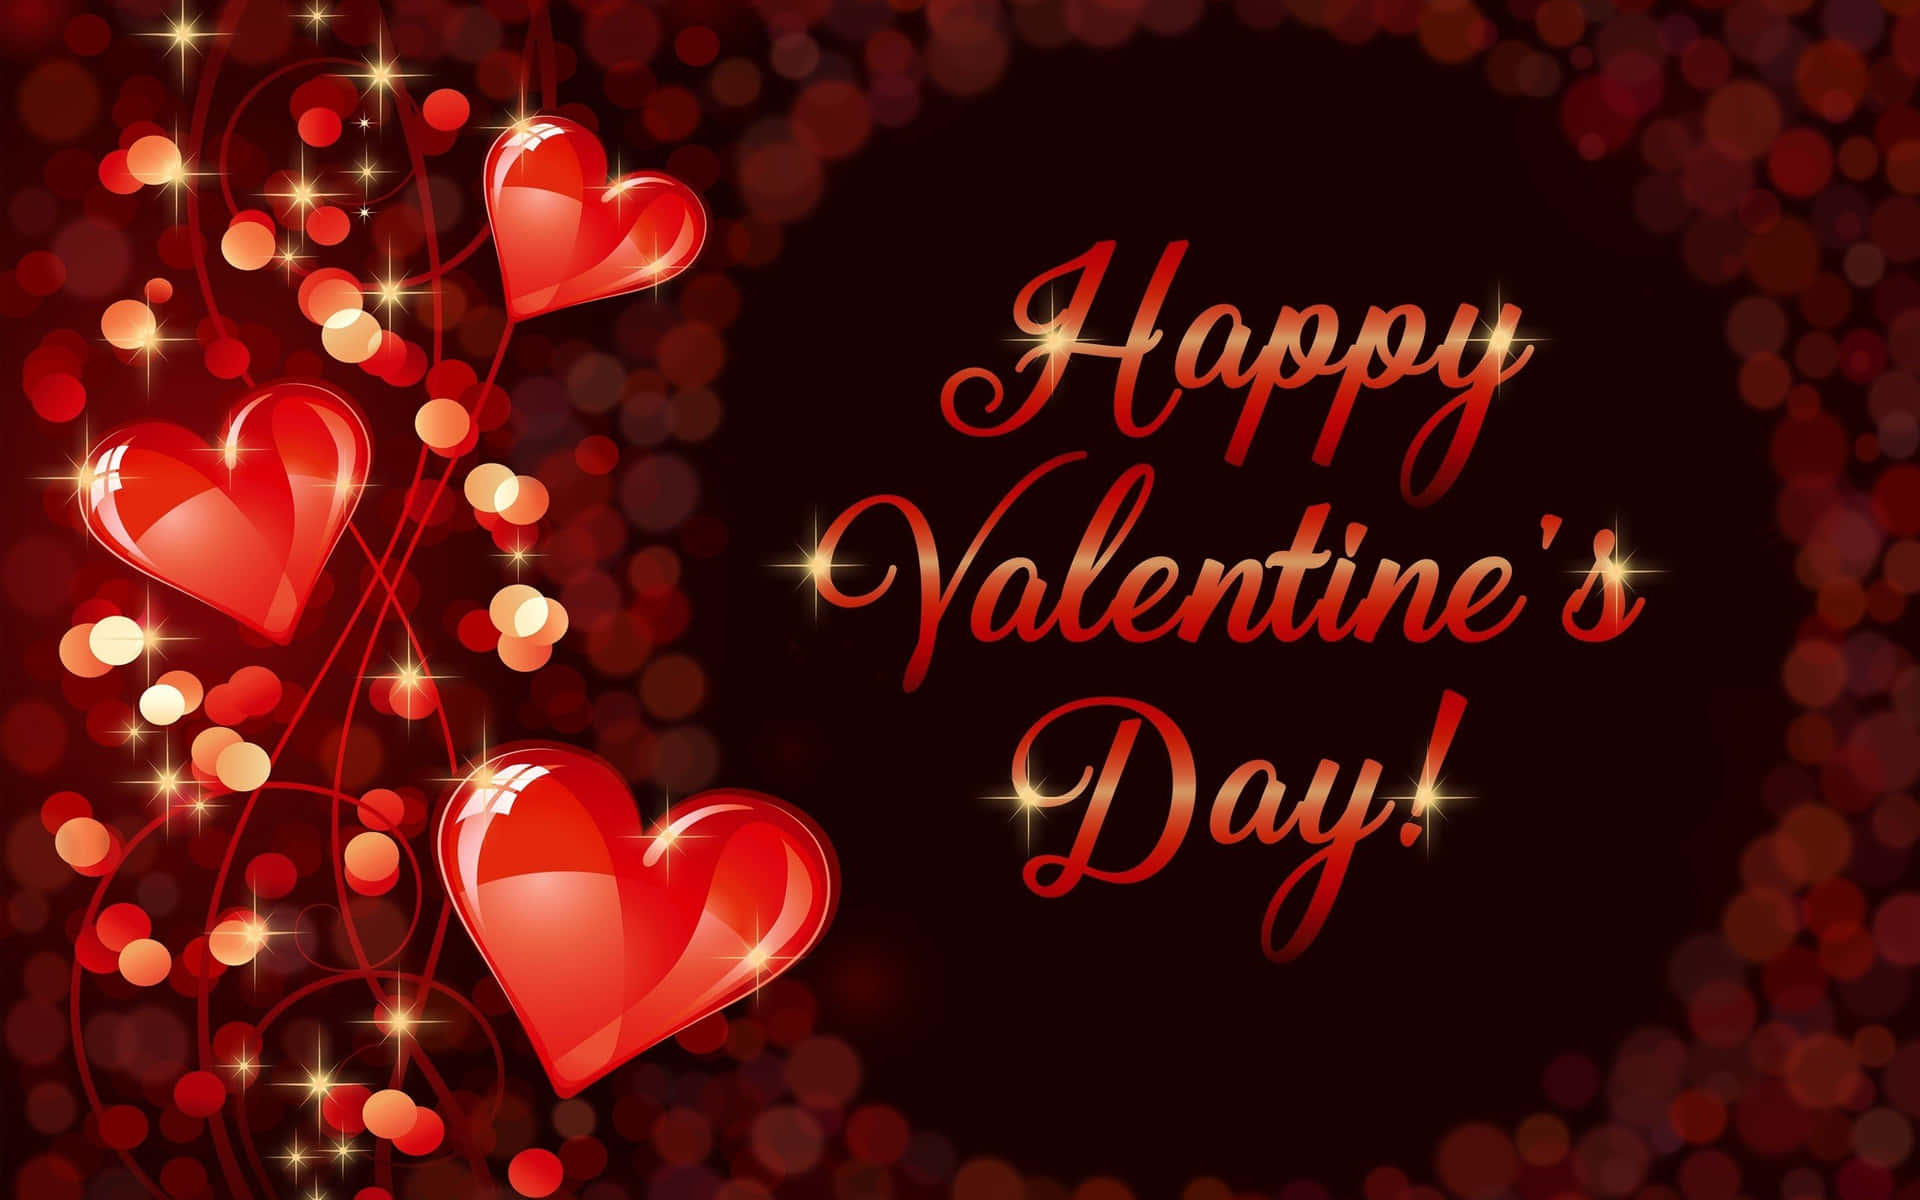 Happy Valentine's Day - Celebrate Love and Romance!